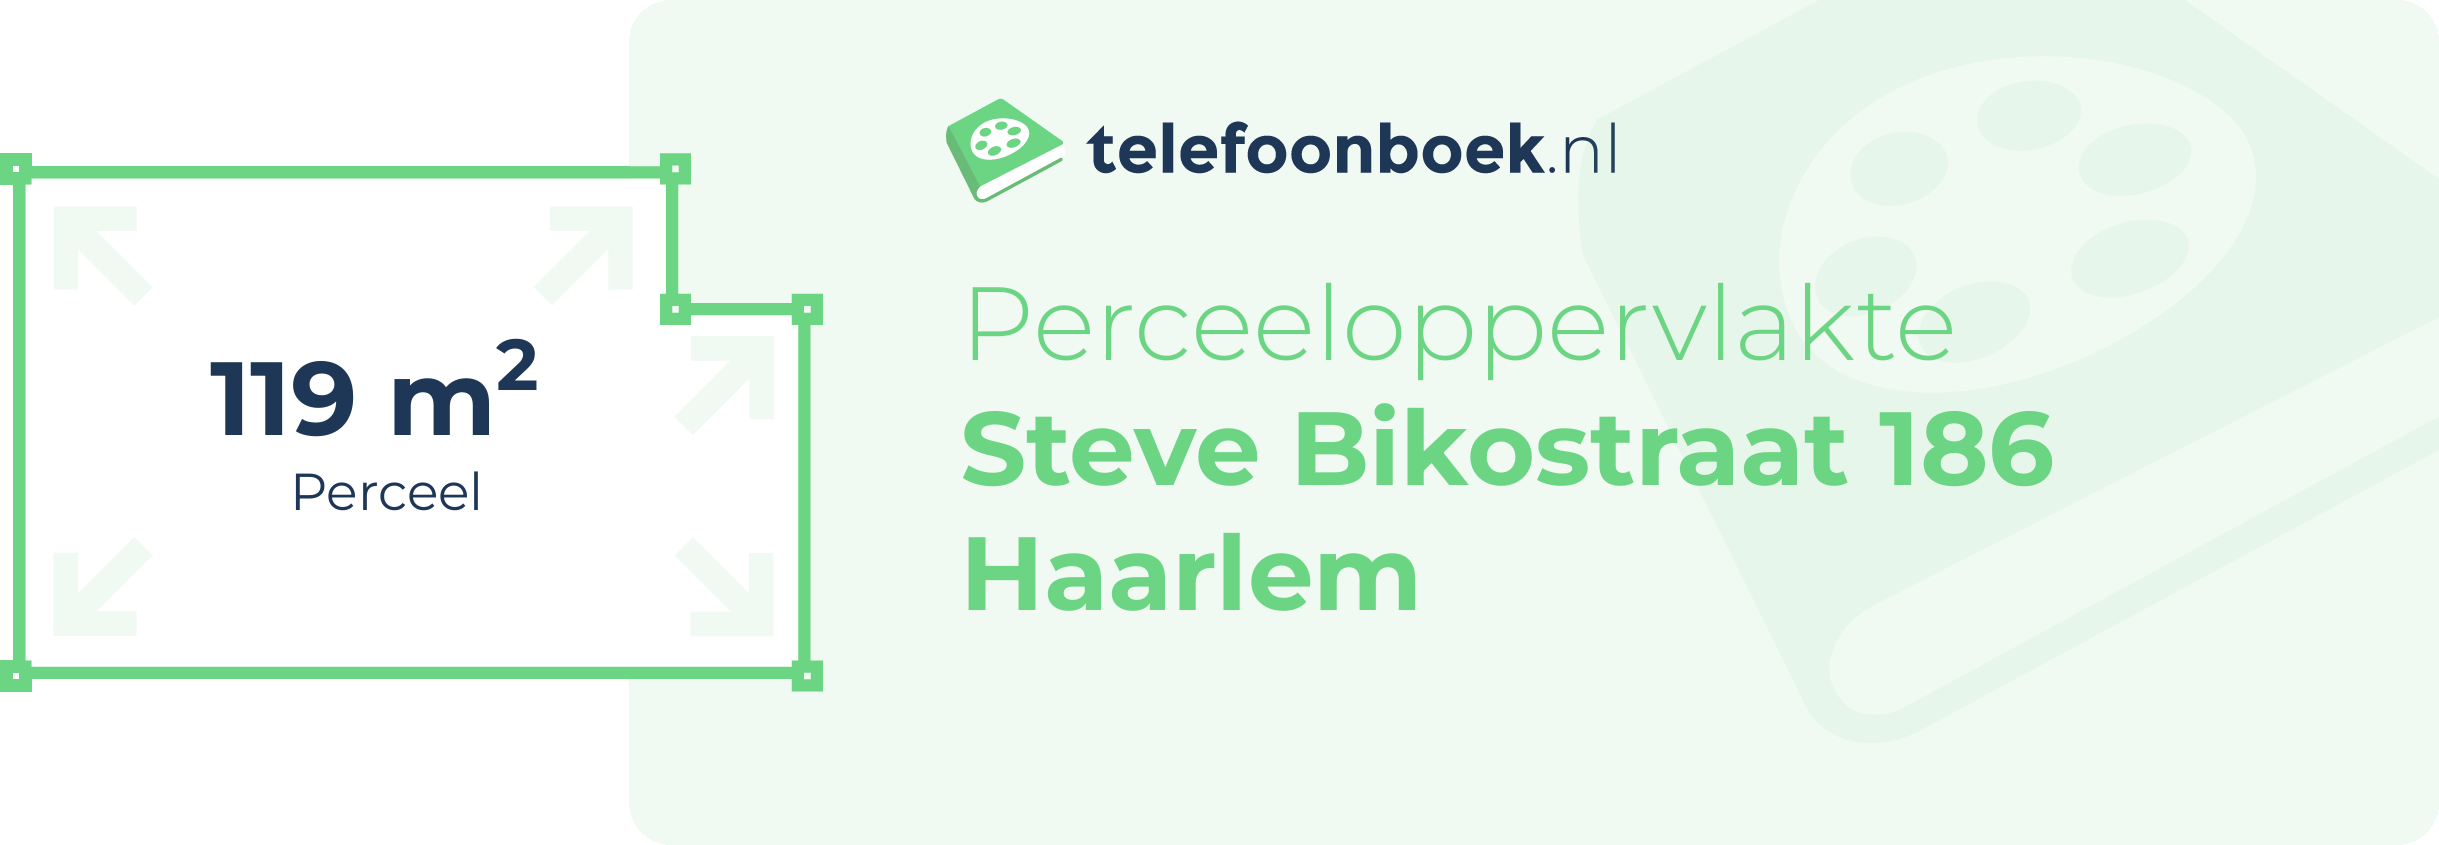 Perceeloppervlakte Steve Bikostraat 186 Haarlem